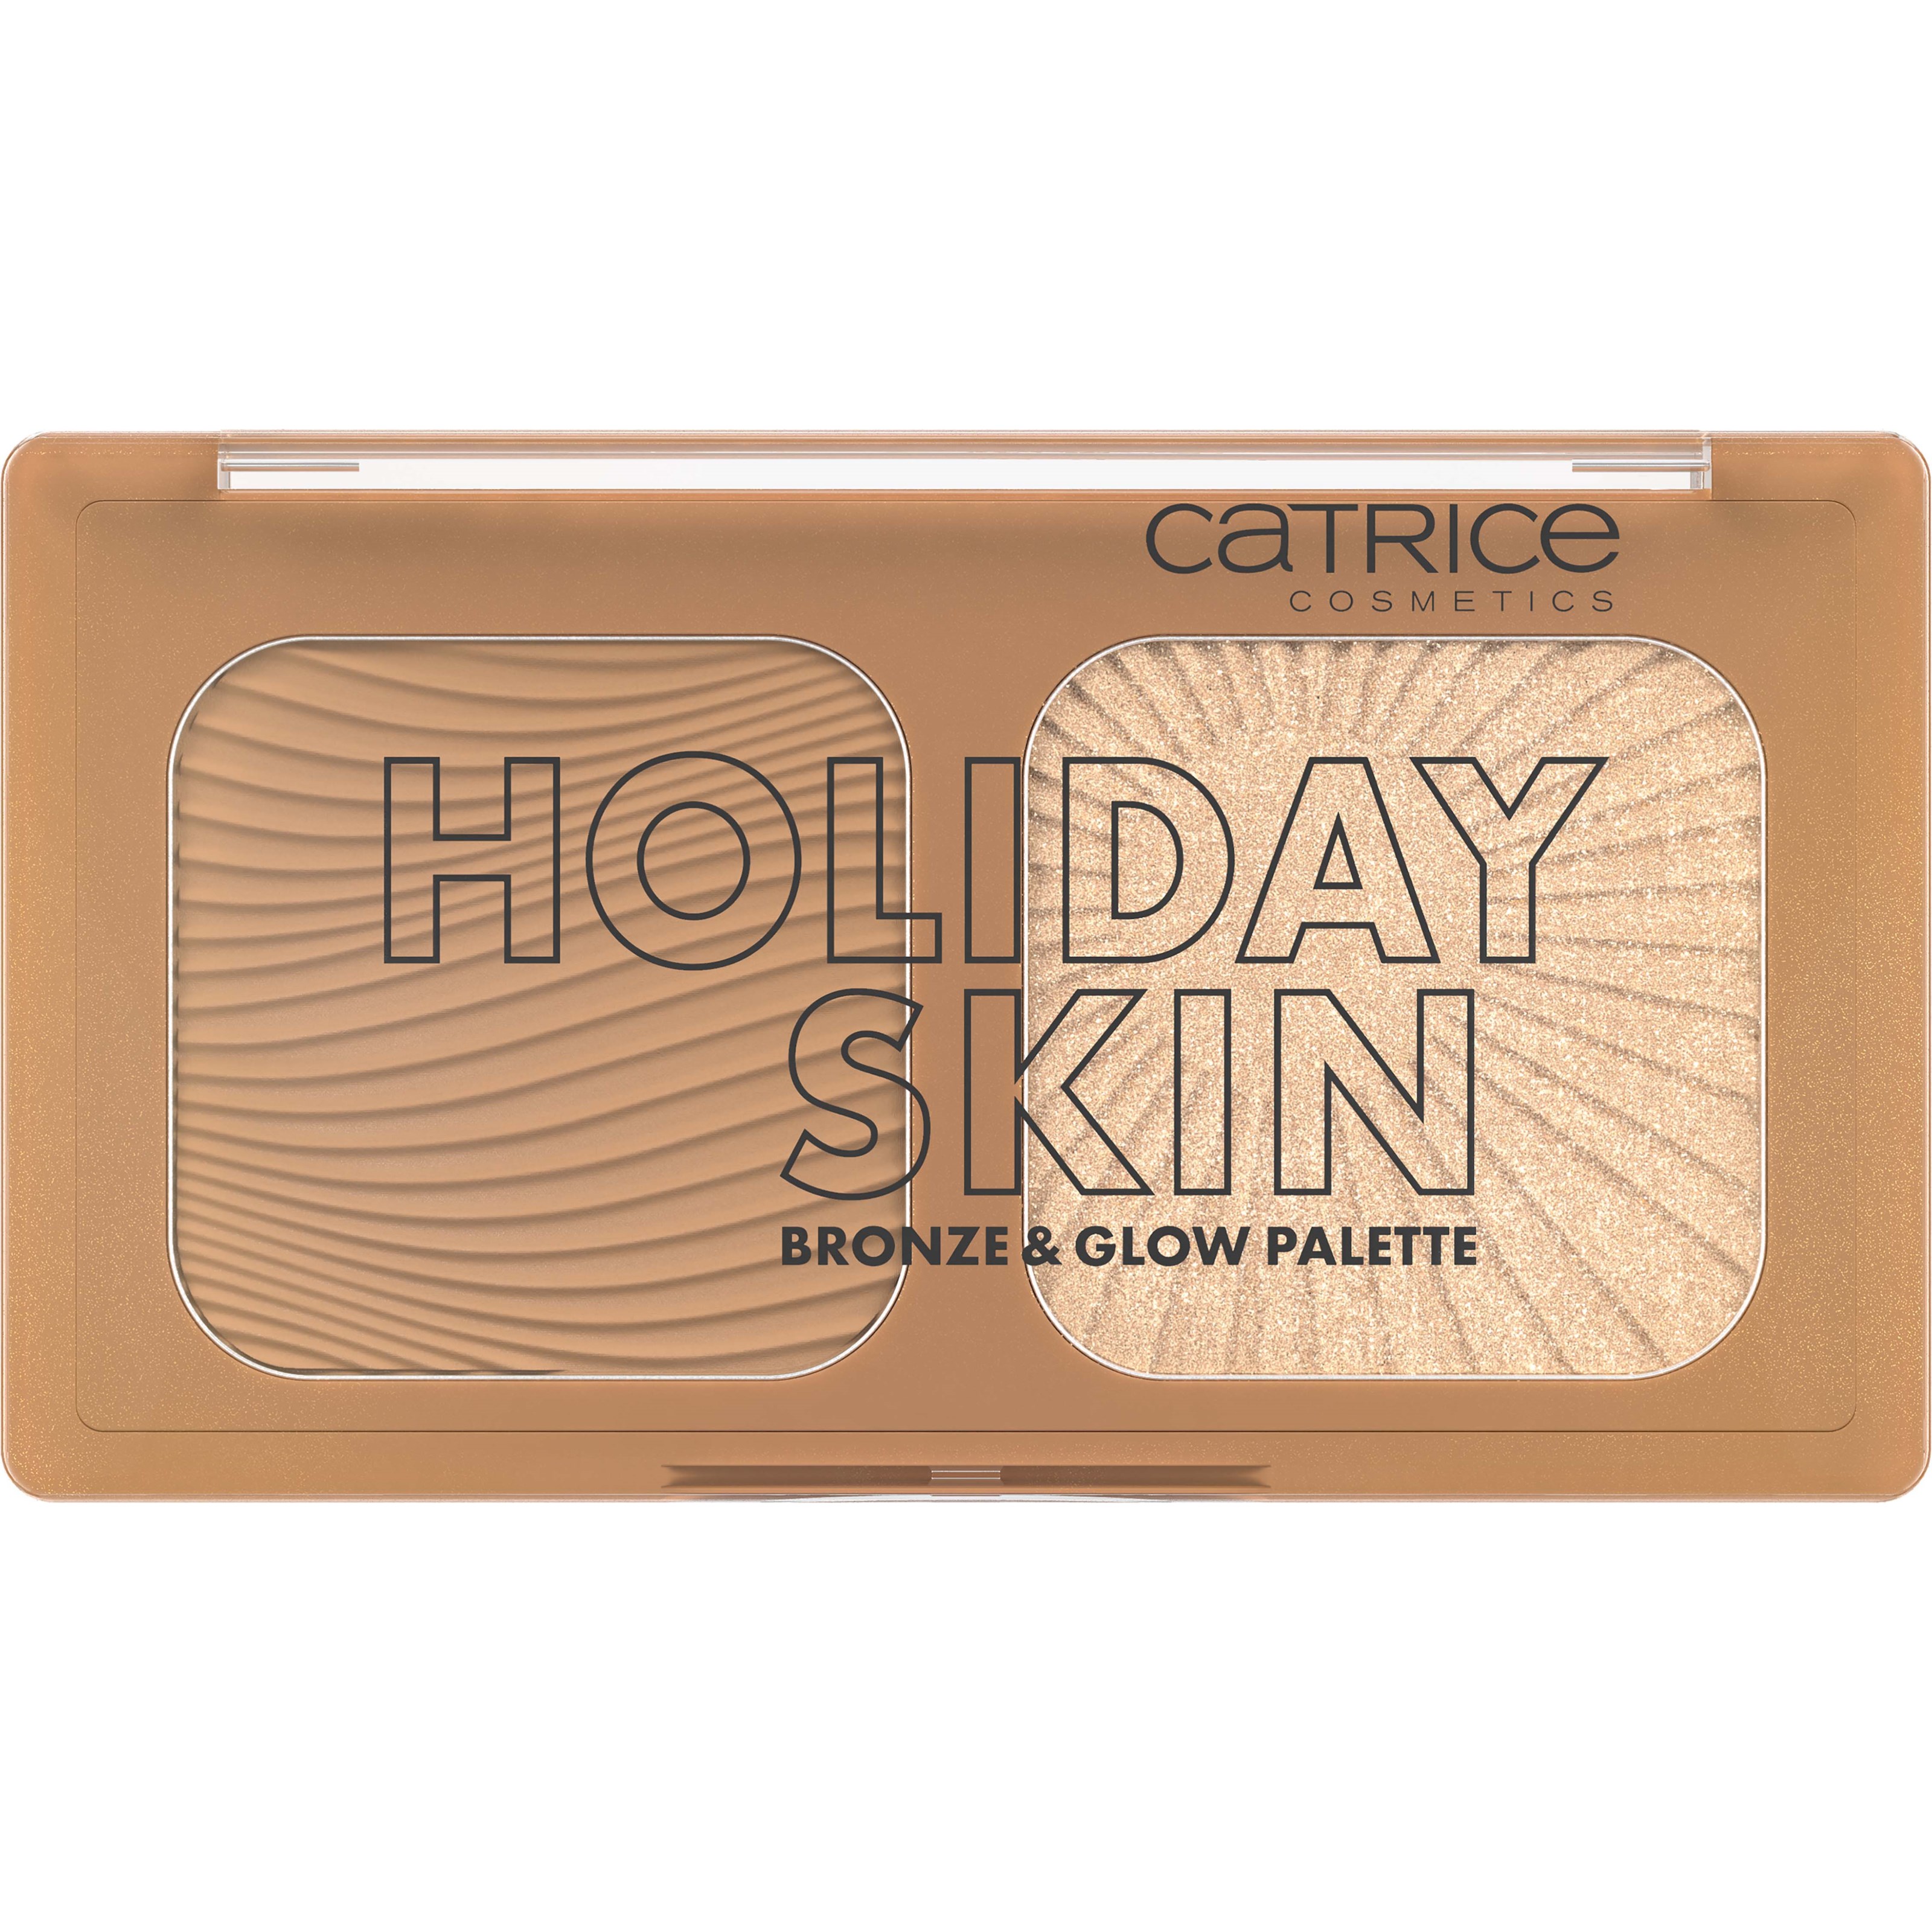 Bilde av Catrice Holiday Skin Bronze & Glow Palette